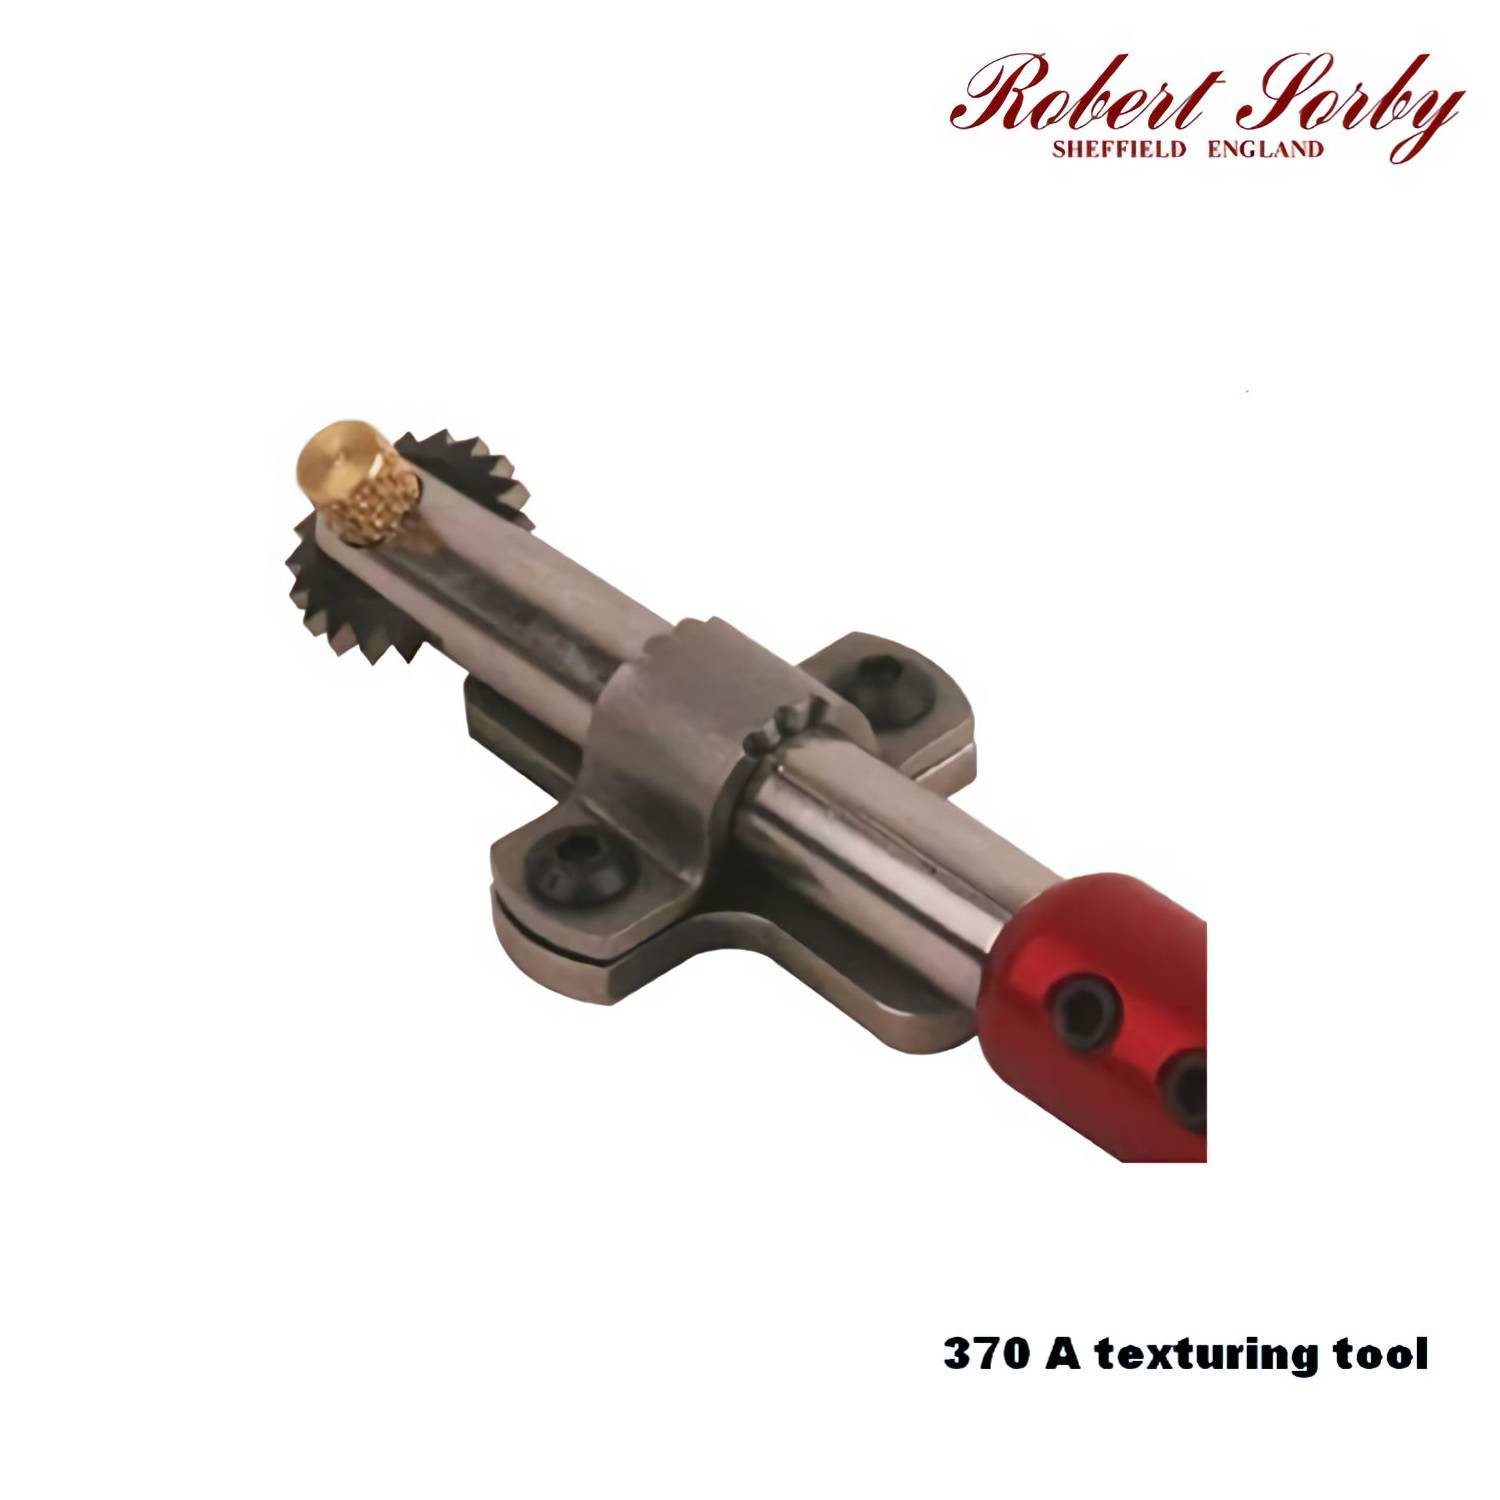 spiralling-tool-370A-Robert-Sorby